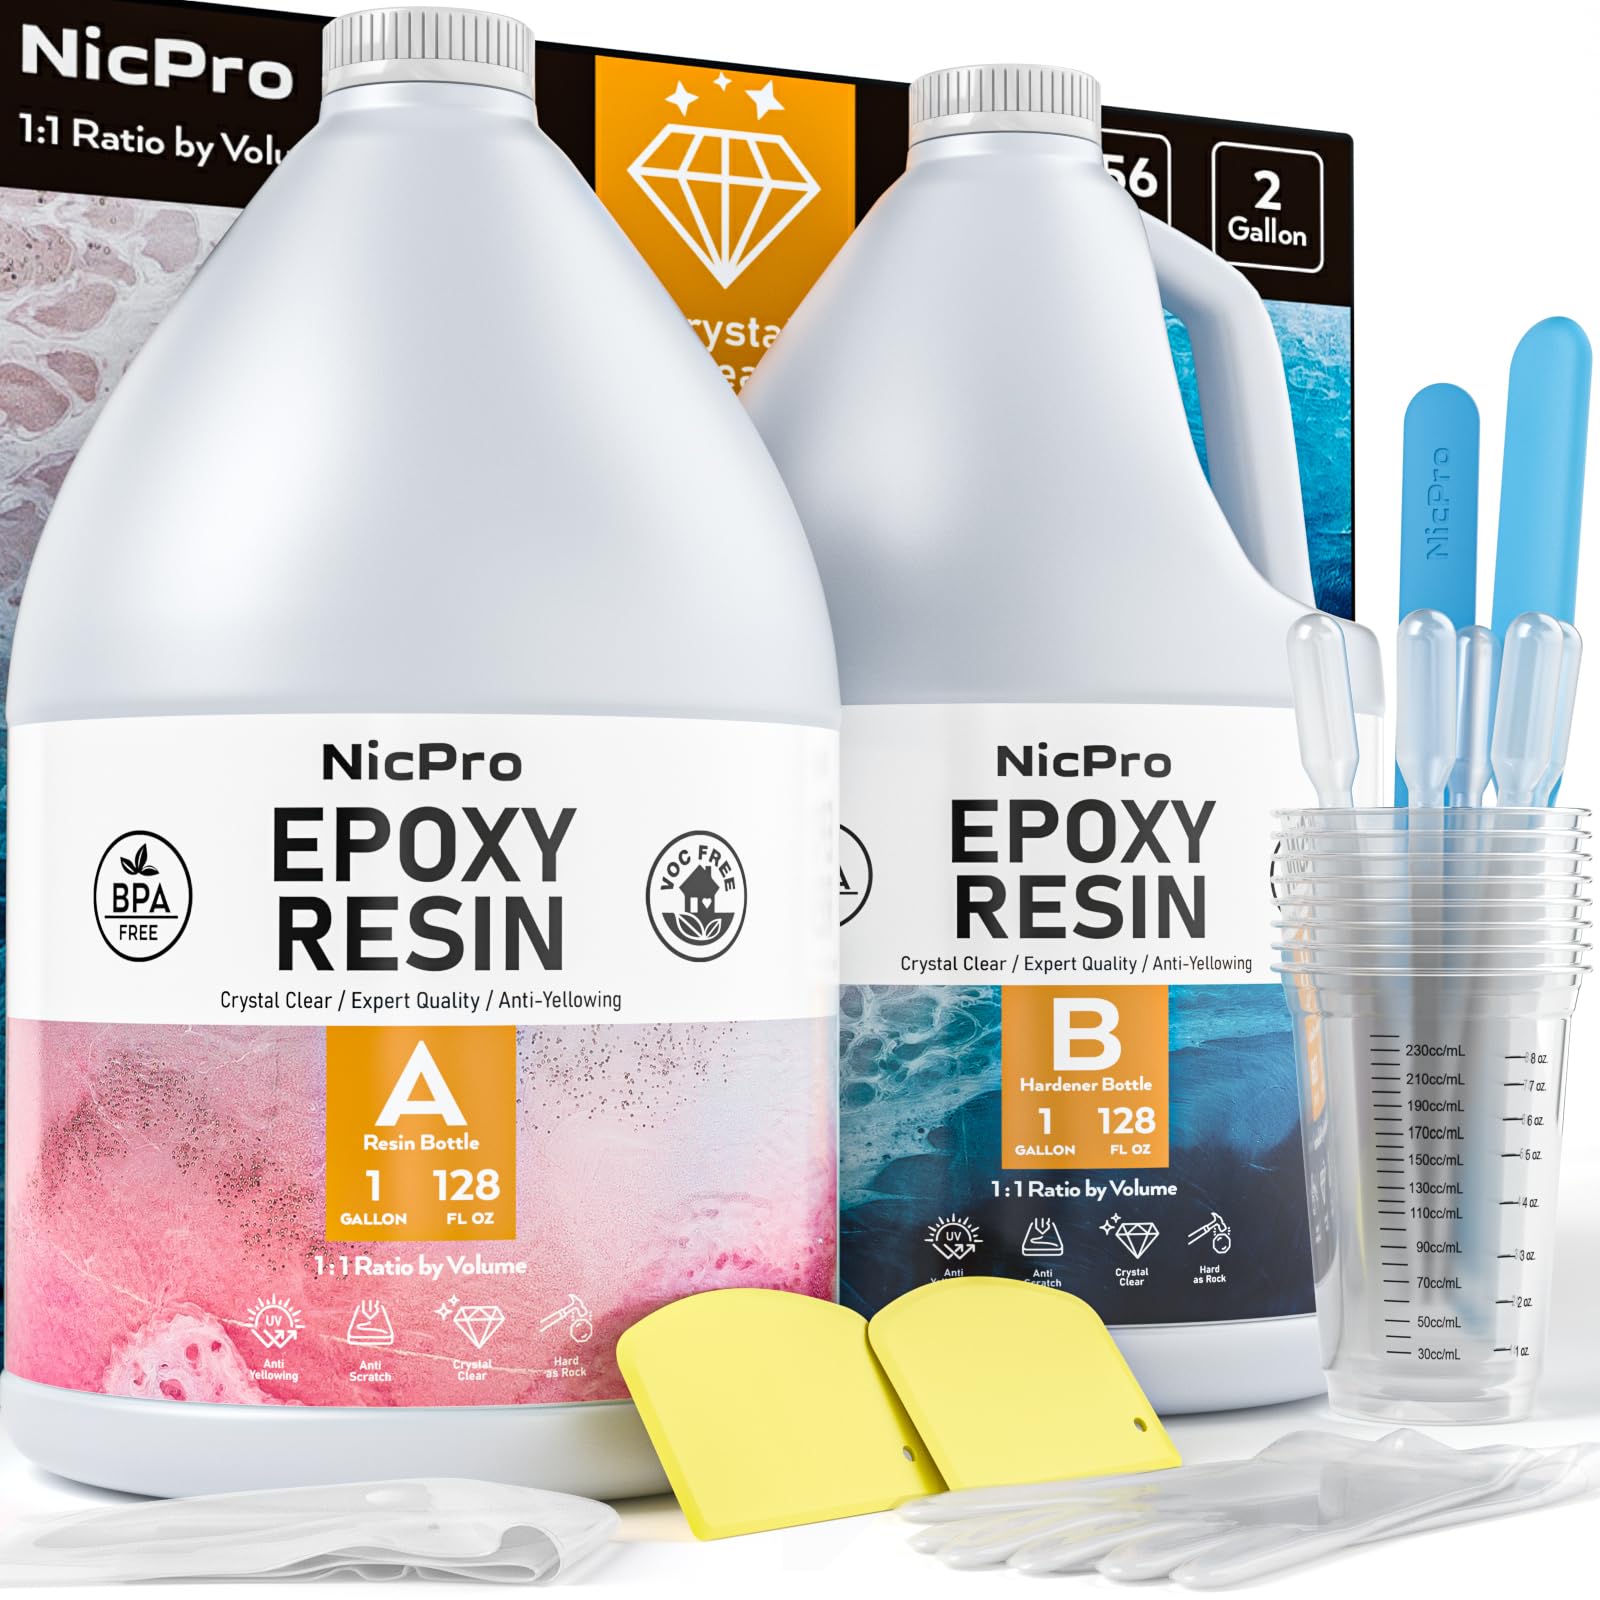 Nicpro 51OZ Deep Pour Epoxy Resin Kit, 2 to 4 Inch Depth Clear Epoxy R